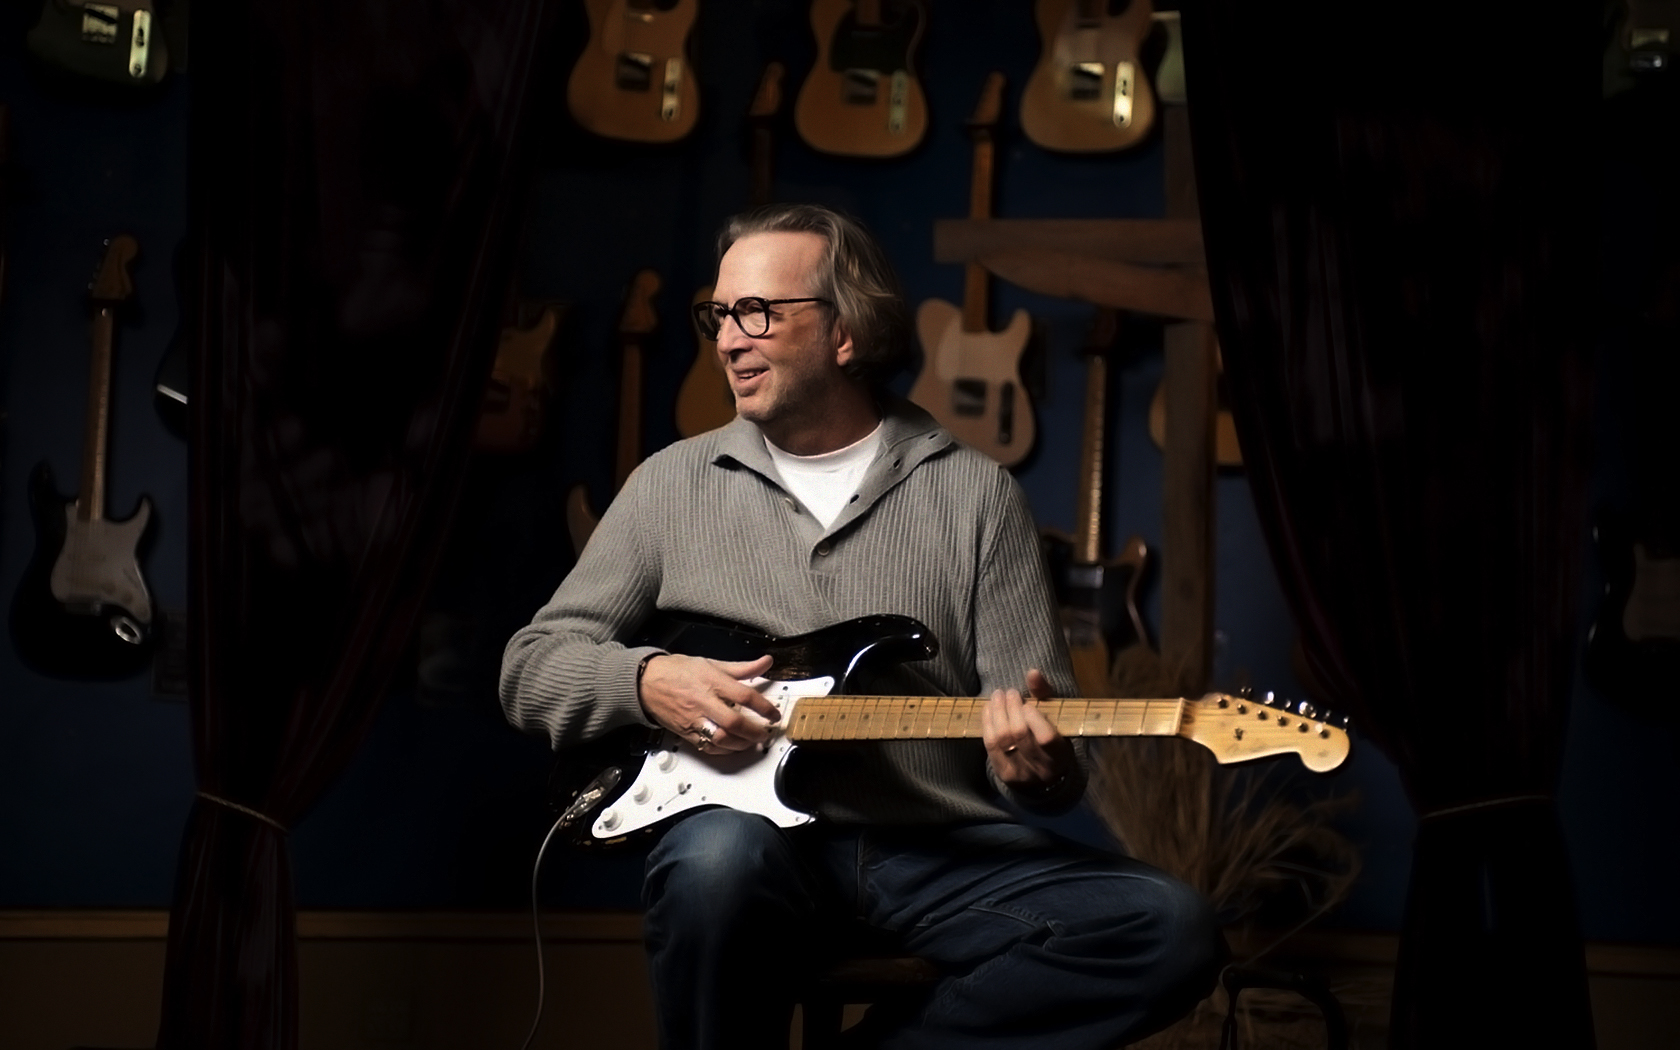 Eric Clapton 2010 2 by JohnnySlowhand on DeviantArt